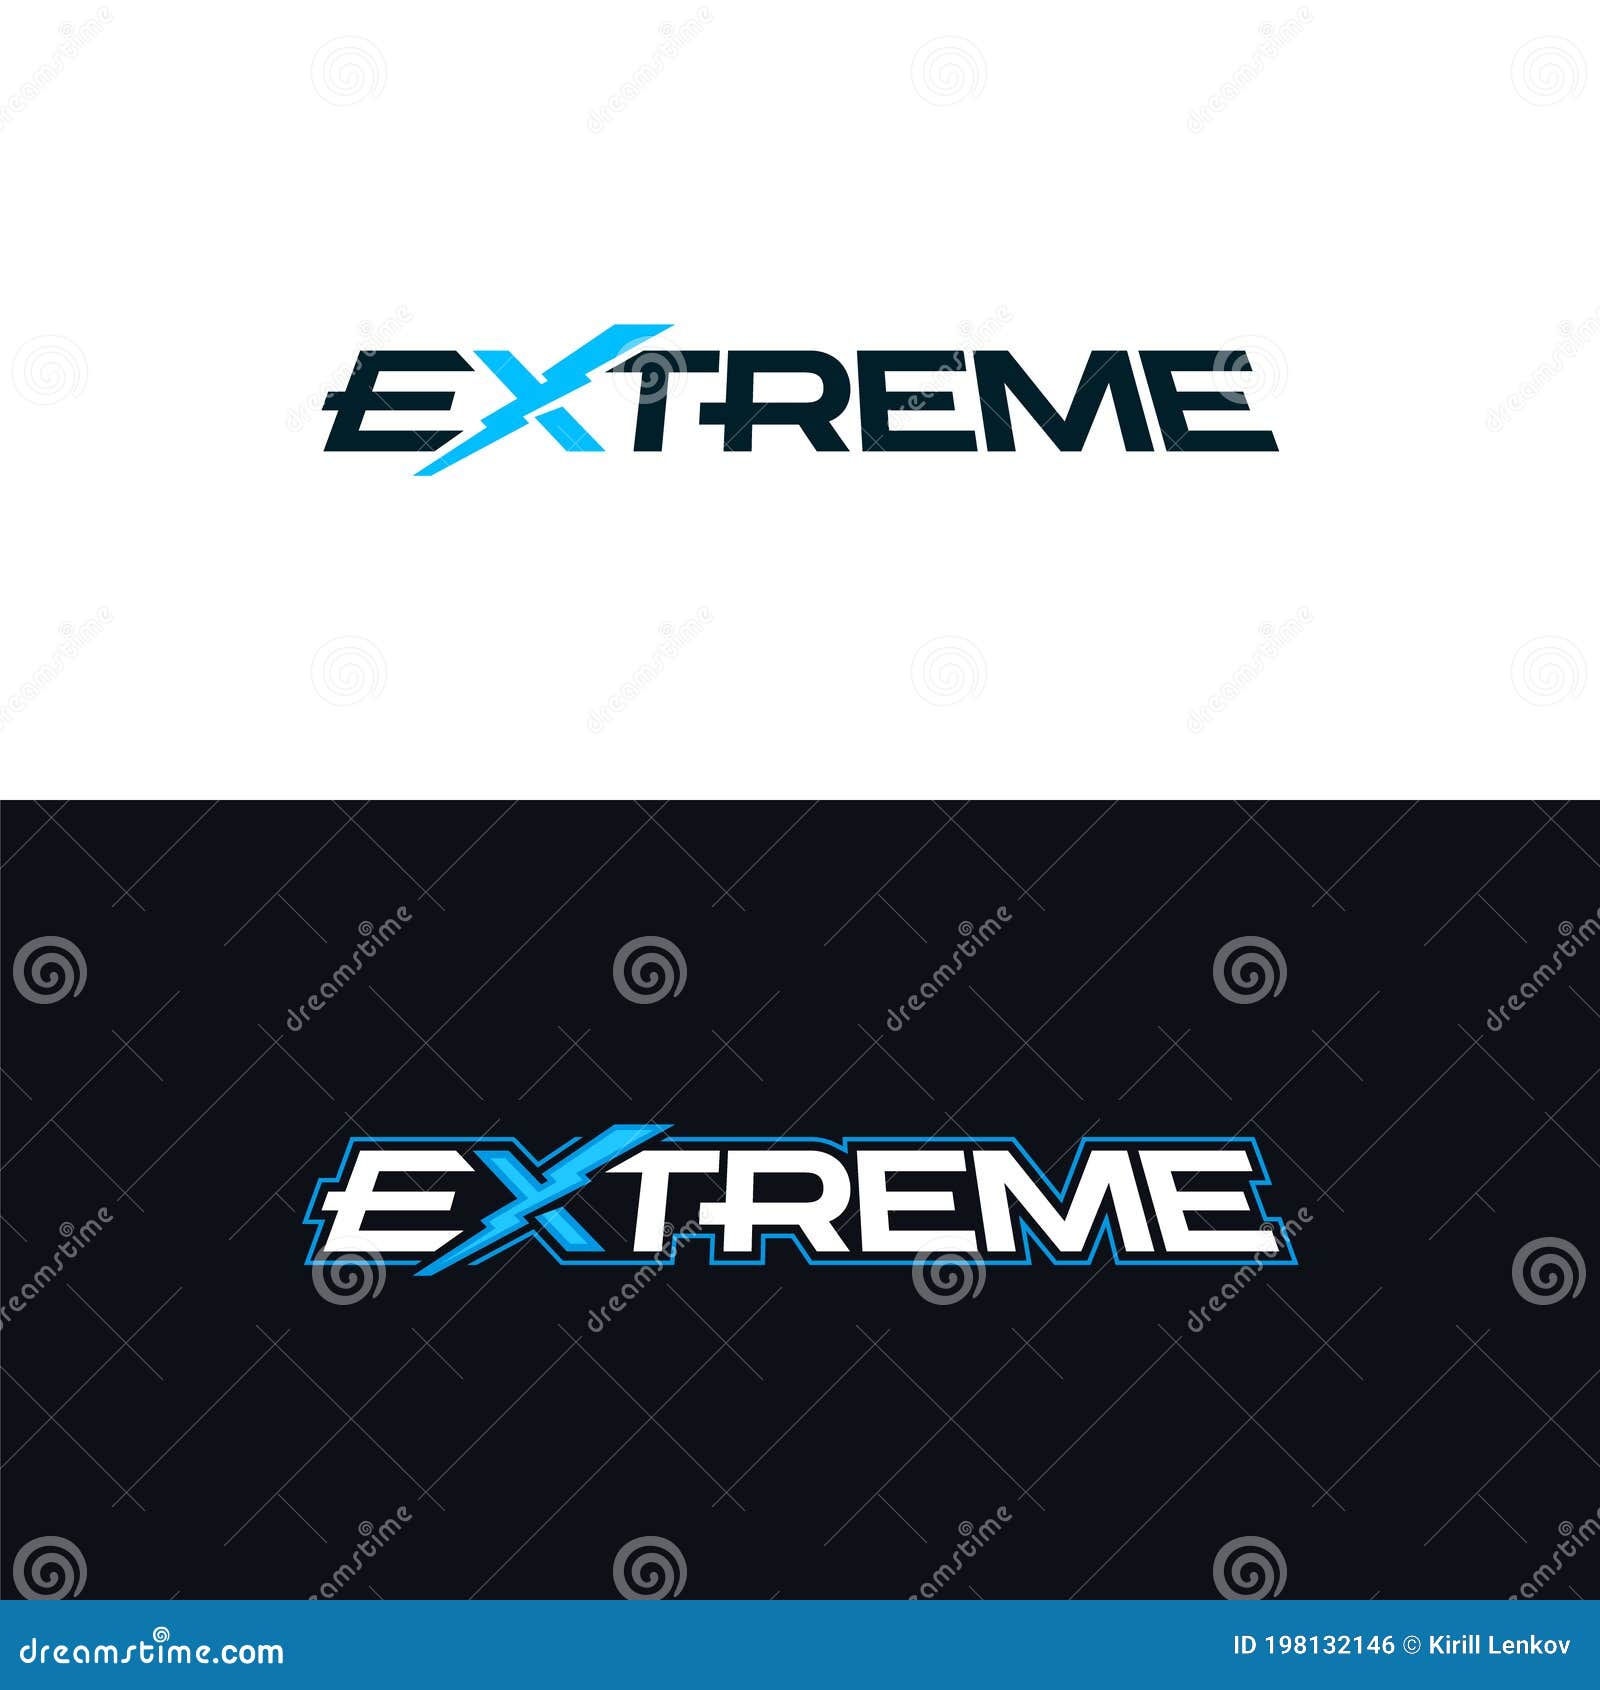 extreme logo. logotype with the word extreme.  